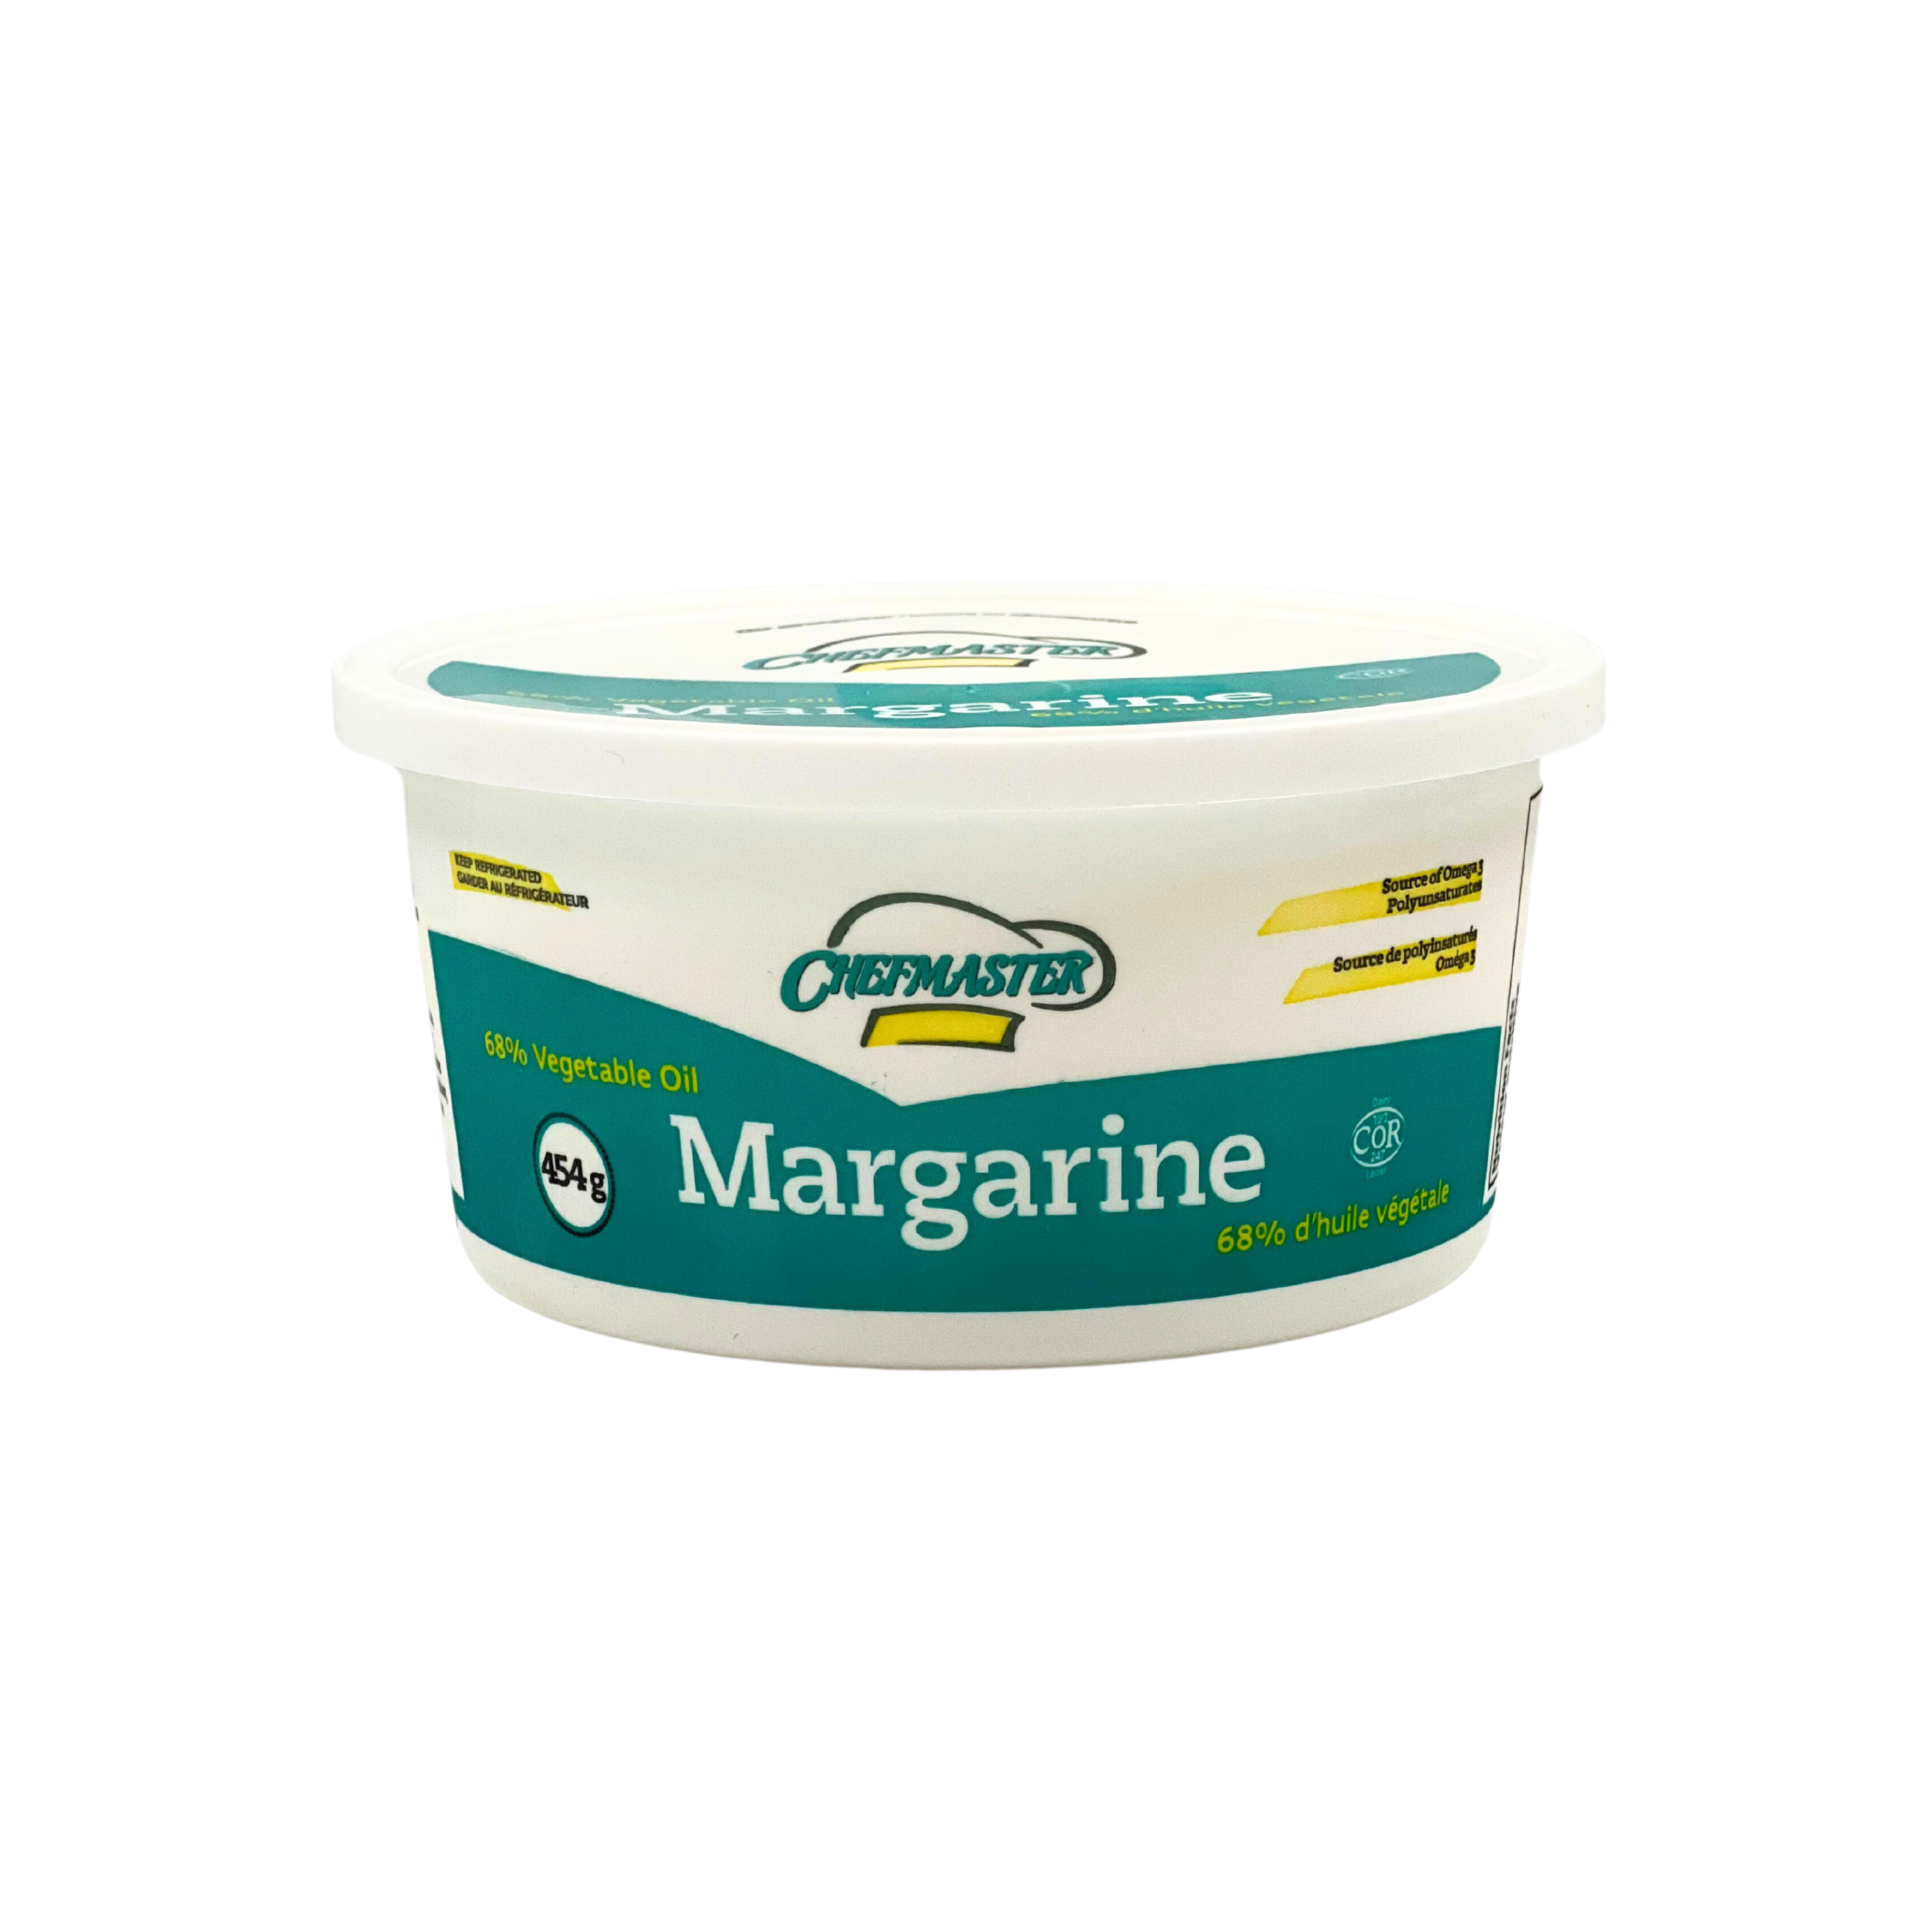 Chefmaster Margarine 454g